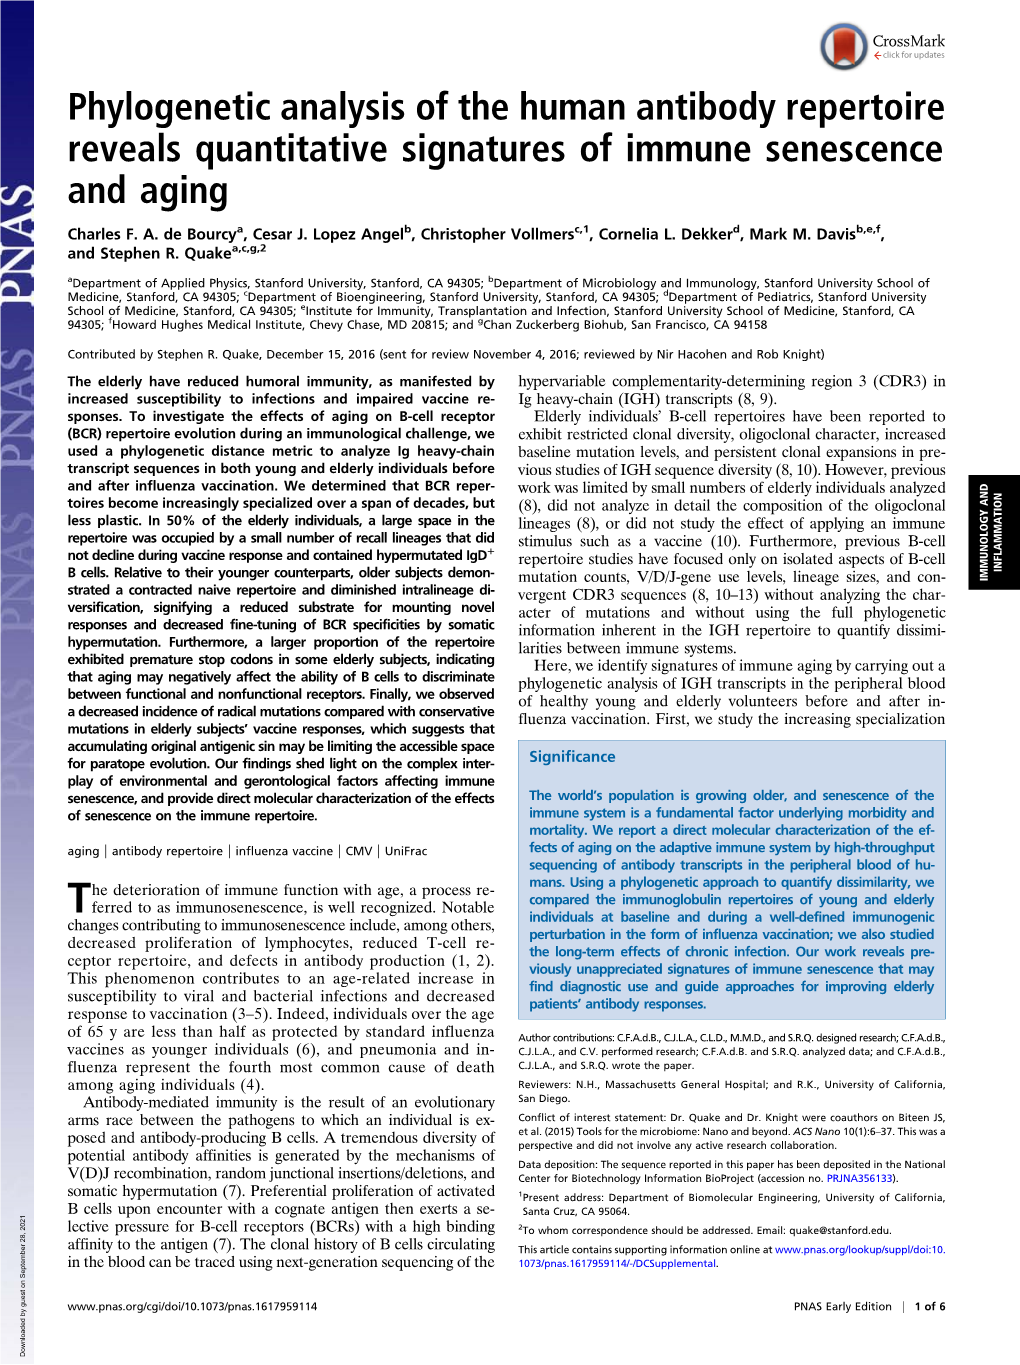 Phylogenetic Analysis of the Human Antibody Repertoire Reveals Quantitative Signatures of Immune Senescence and Aging